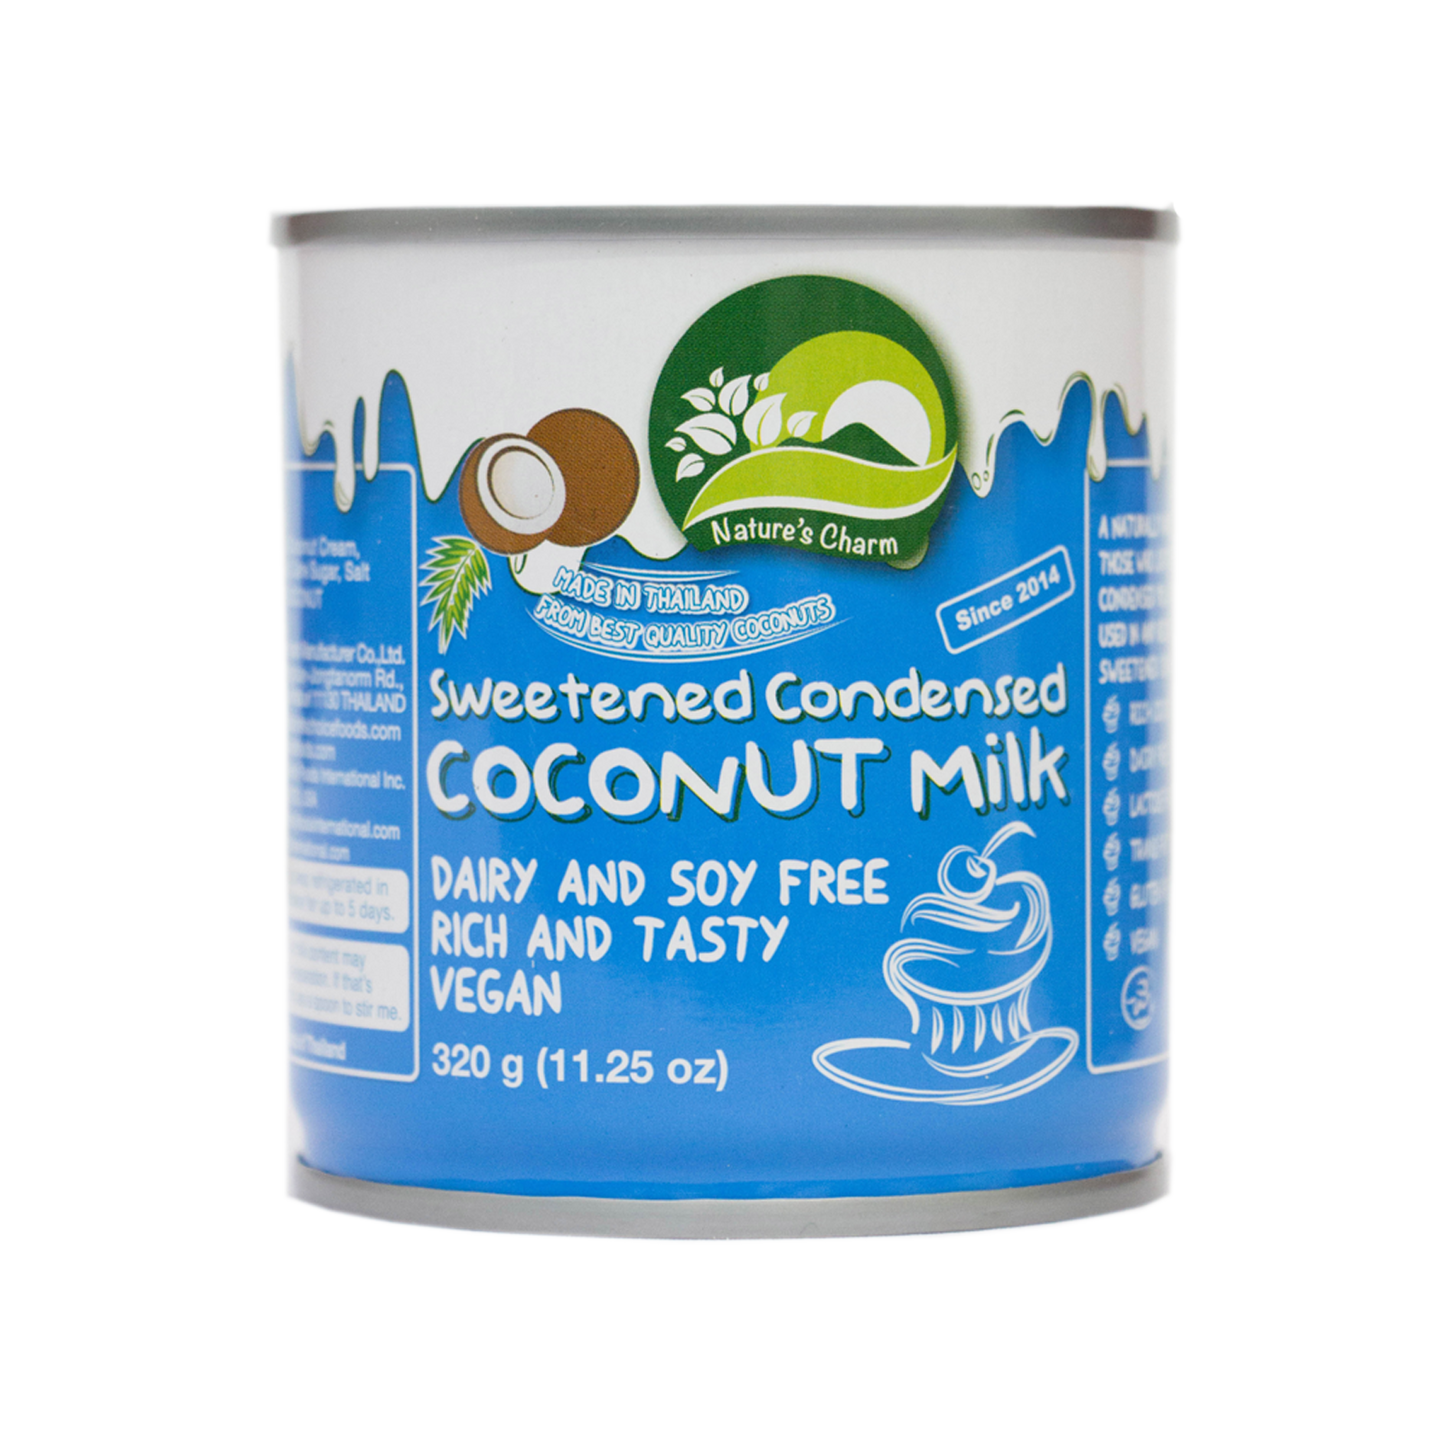 Nature's Charm - Sweetened Condensed Coconut Milk